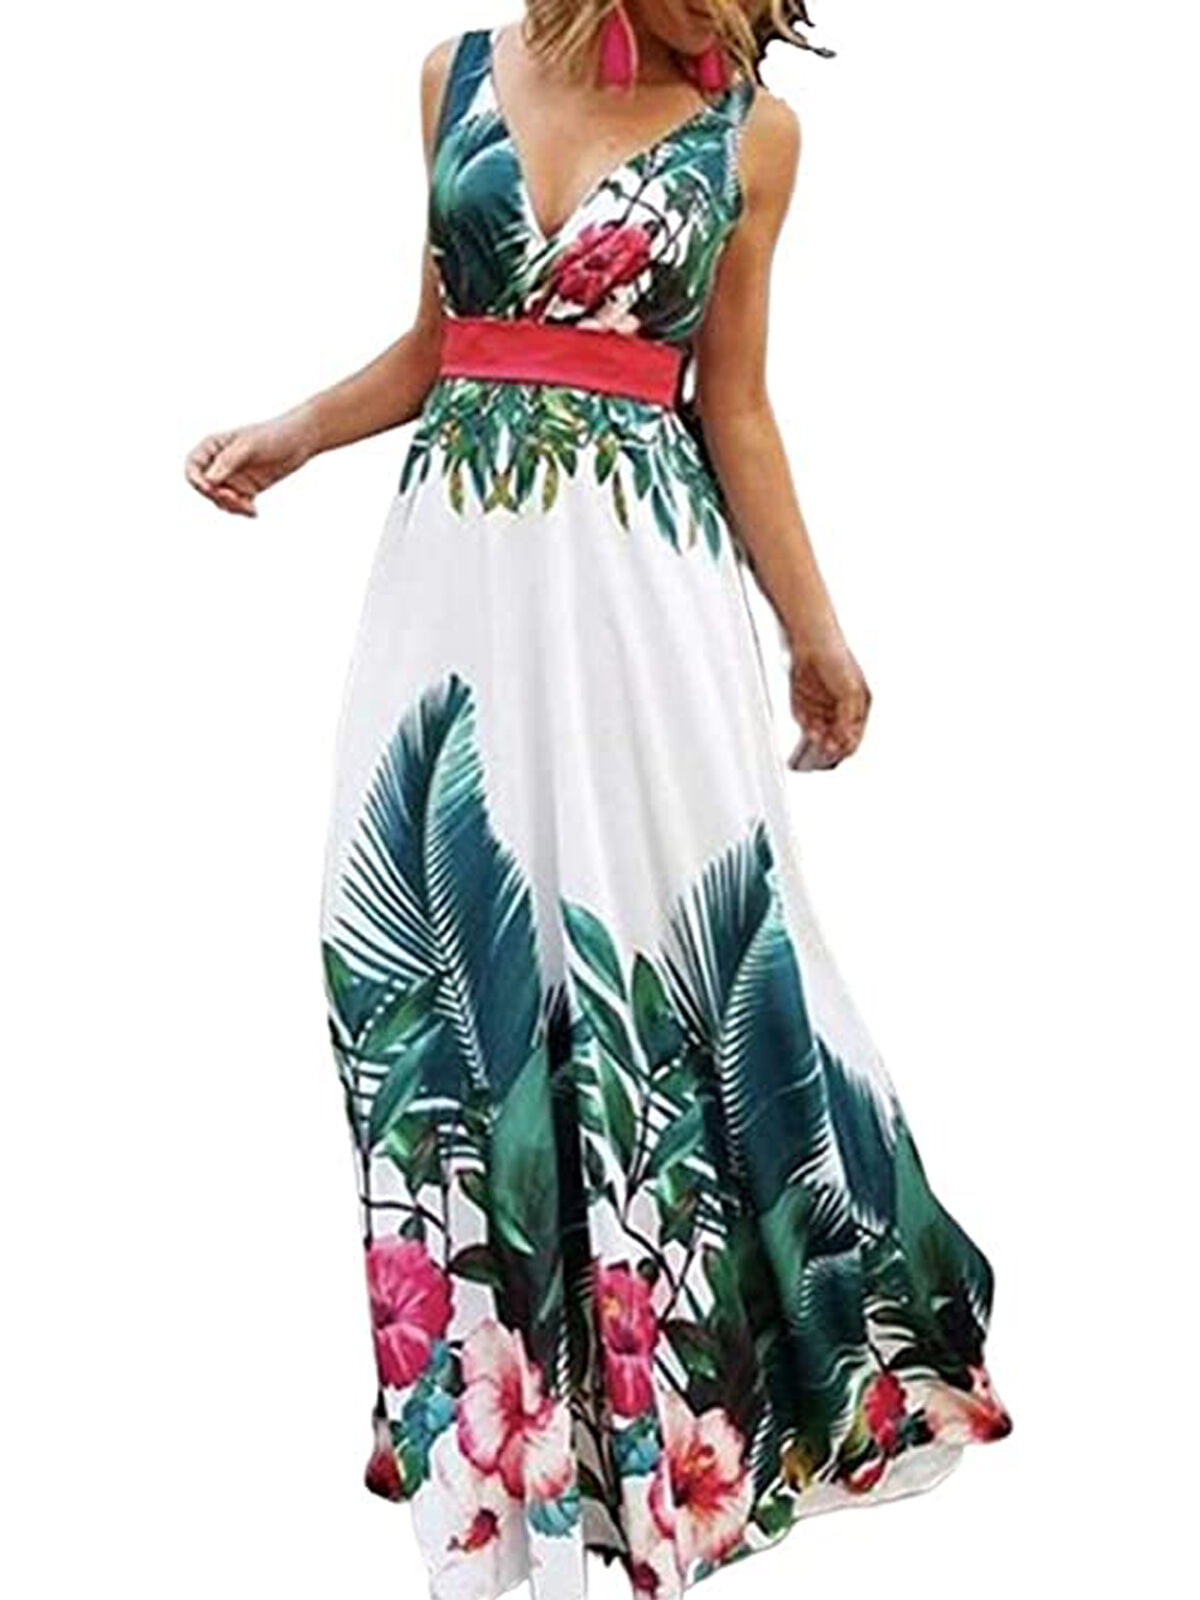 NREALY Womens Summer Boho Casual Printed Maxi Party Cocktail Beach Dress Sundress